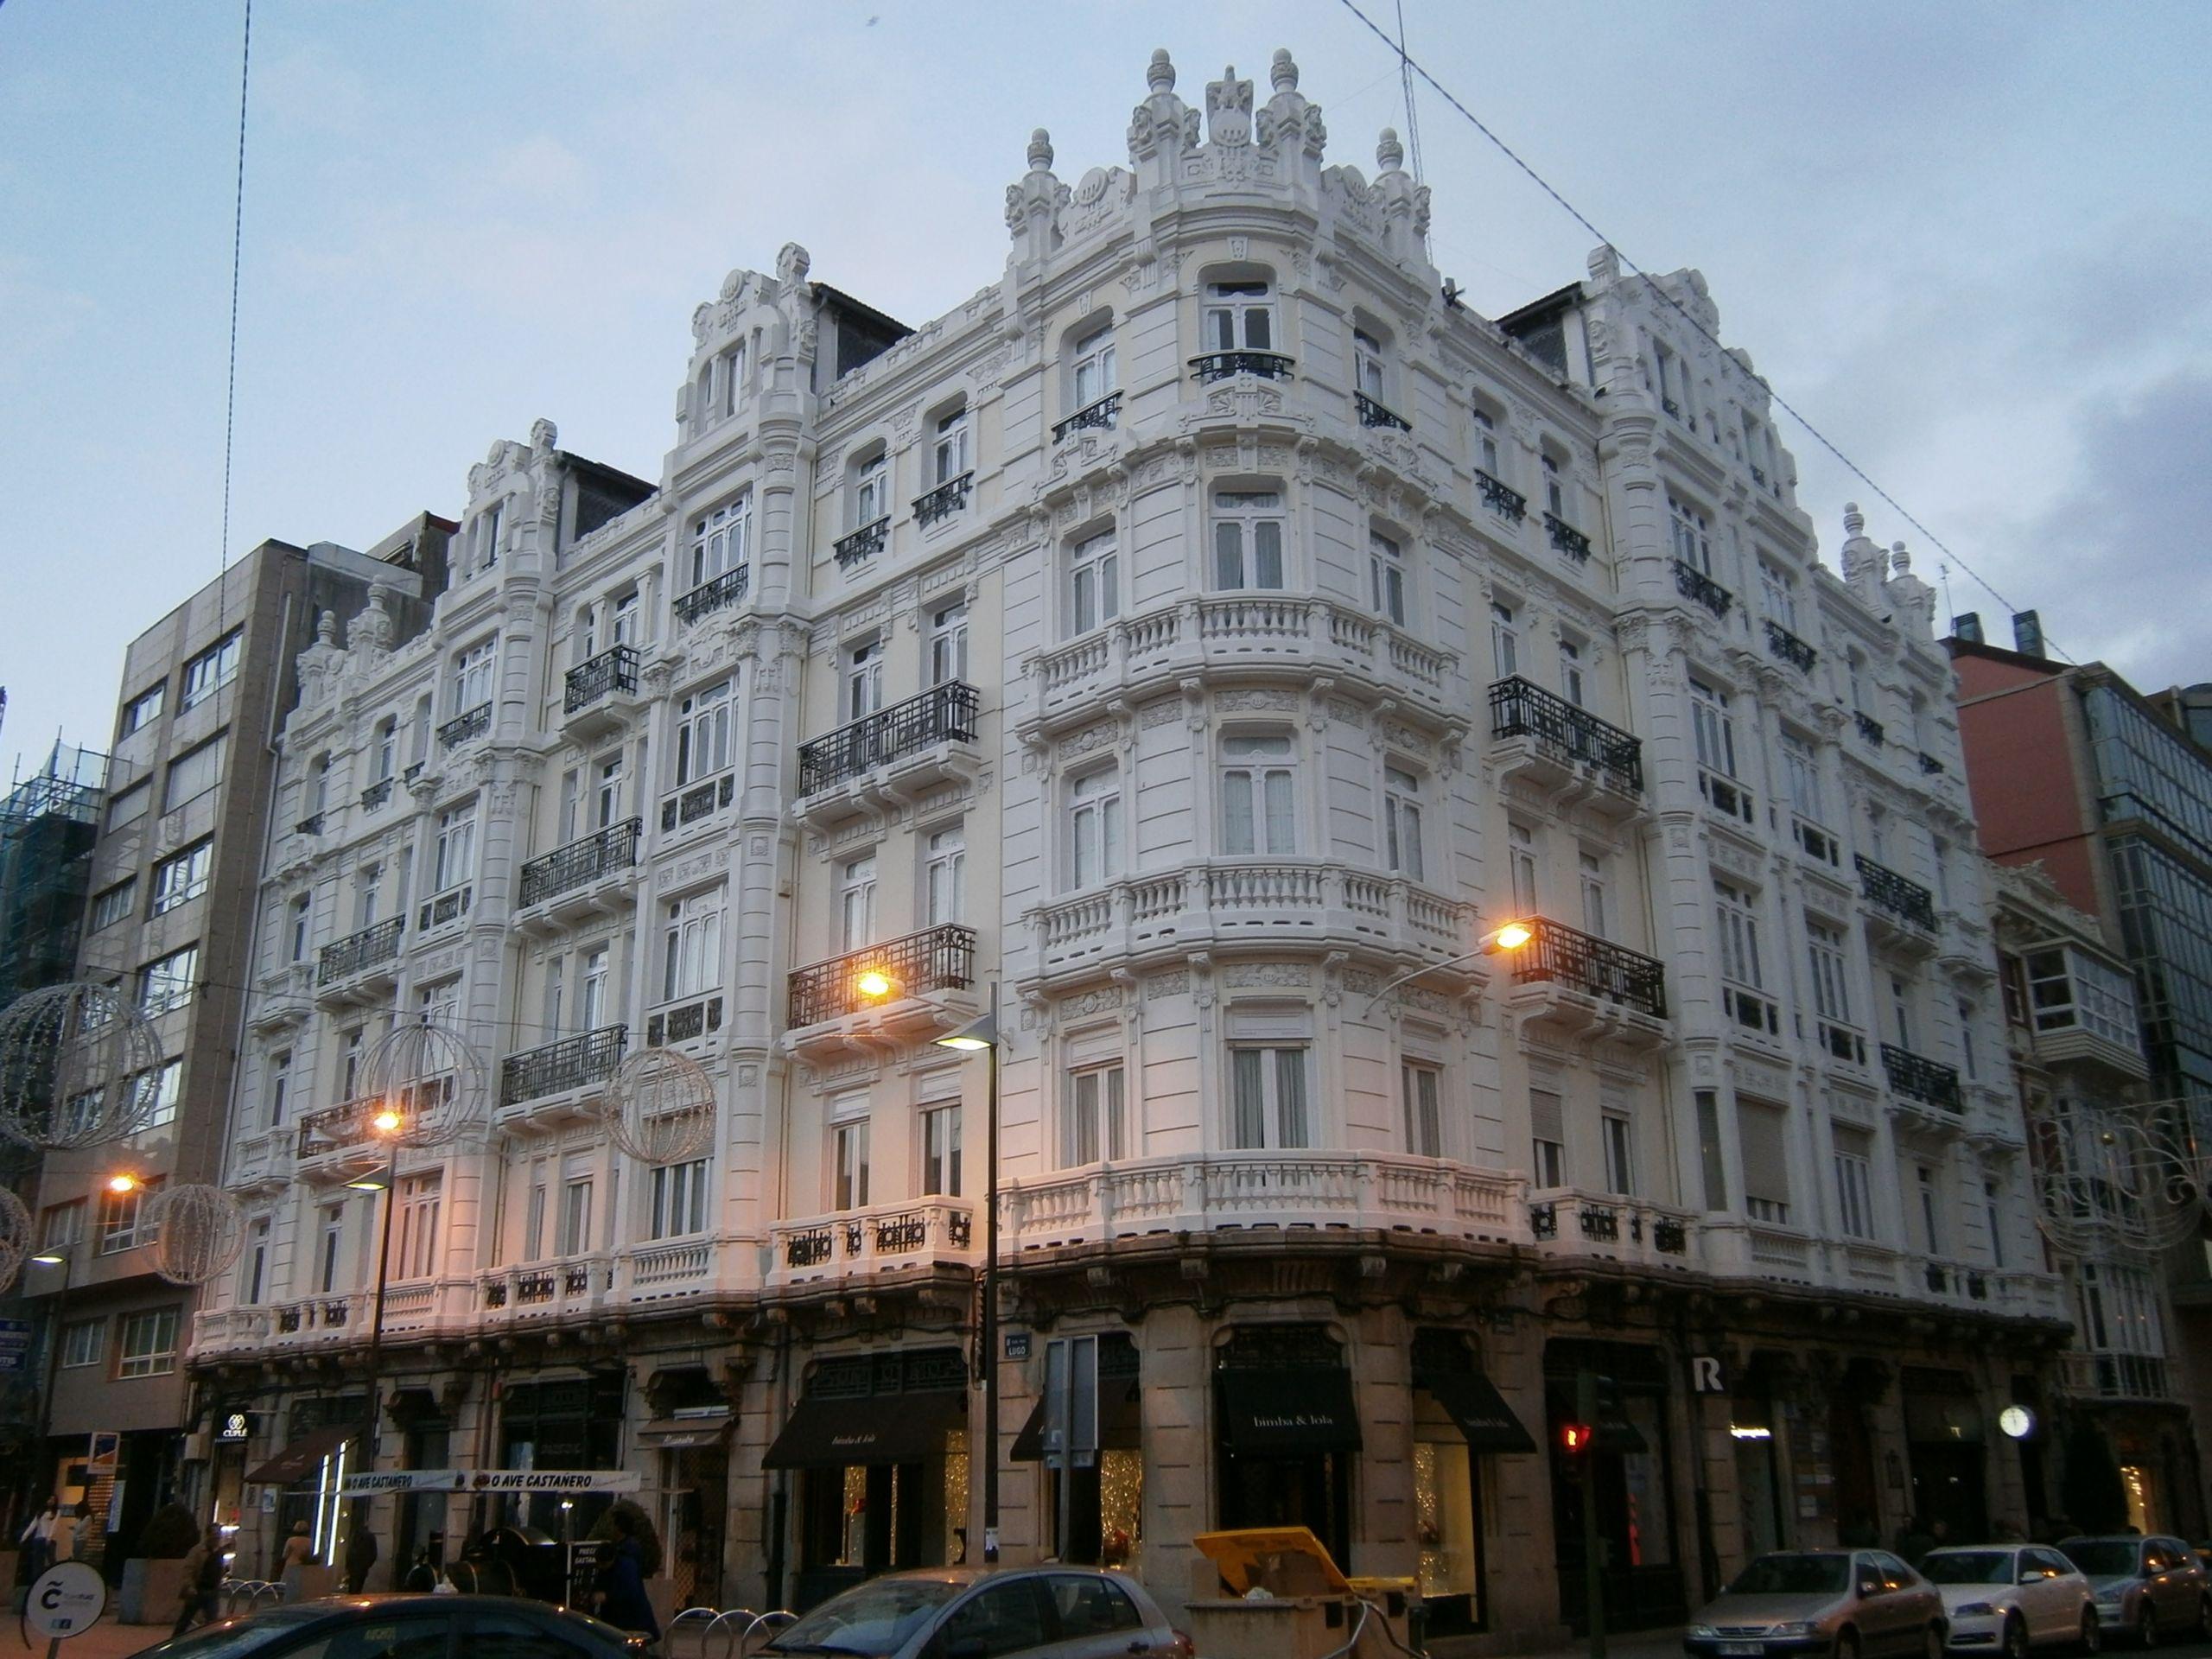 Casa Viturro de A Coruña (Wikipedia)